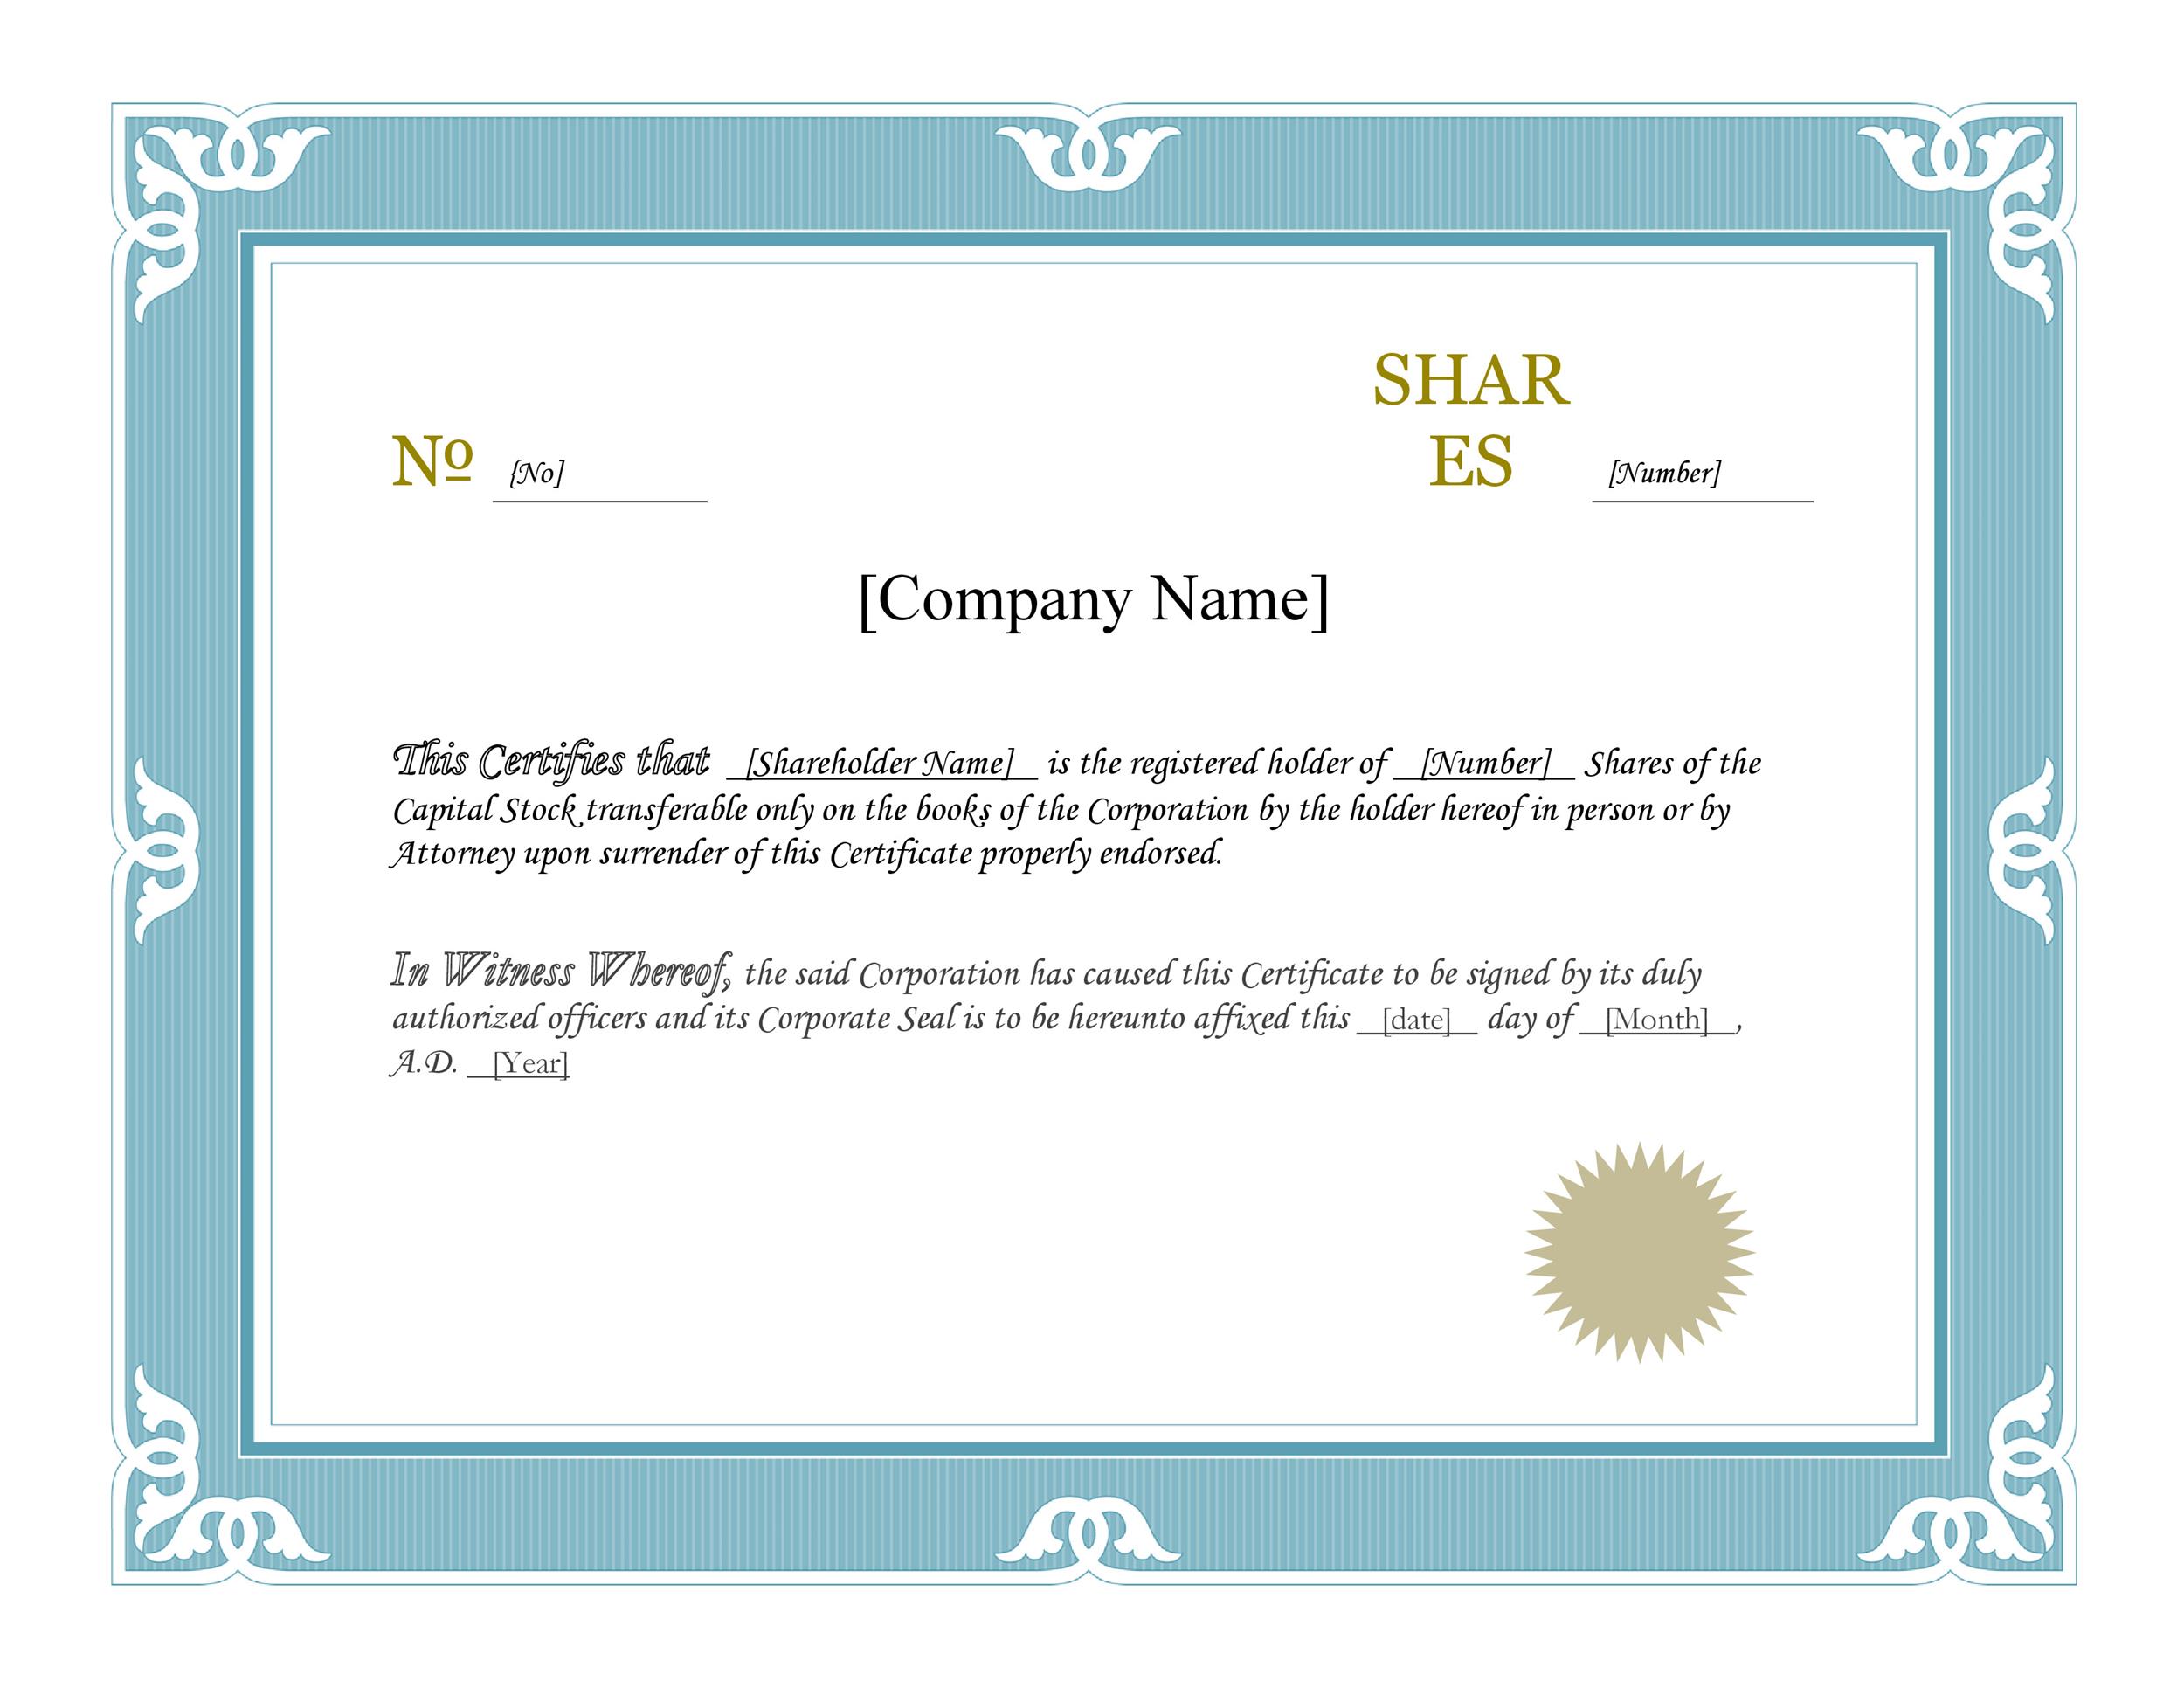 40  Free Stock Certificate Templates (Word PDF) ᐅ TemplateLab